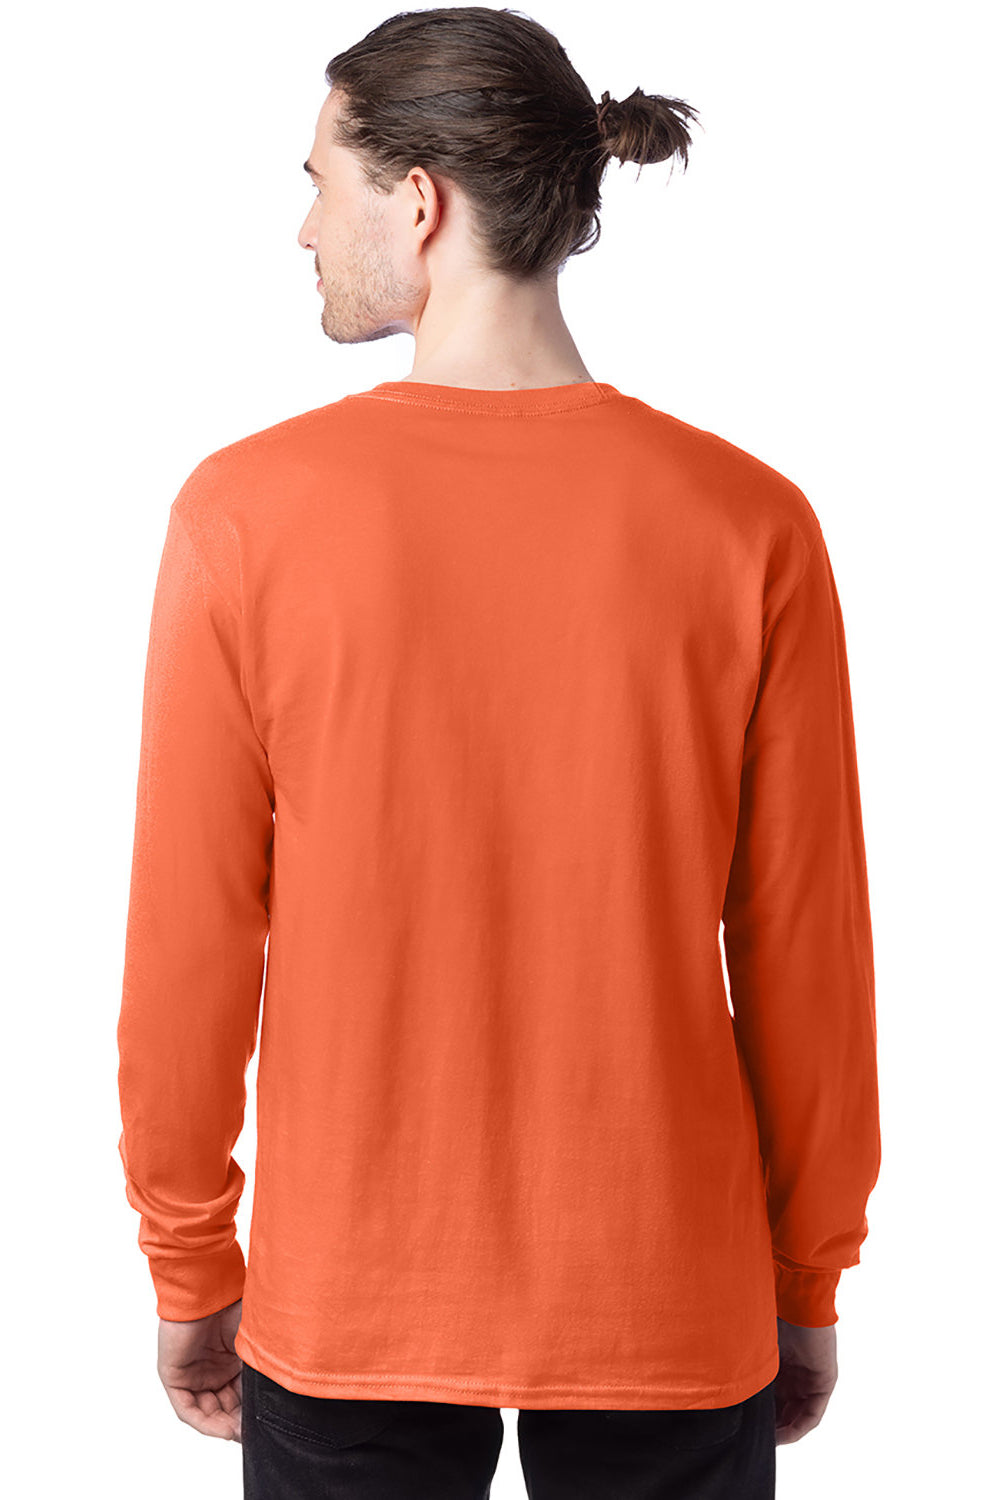 Hanes Mens Big ComfortWash Garment Dyed Fleece Sweatshirt, S, Texas Orange  